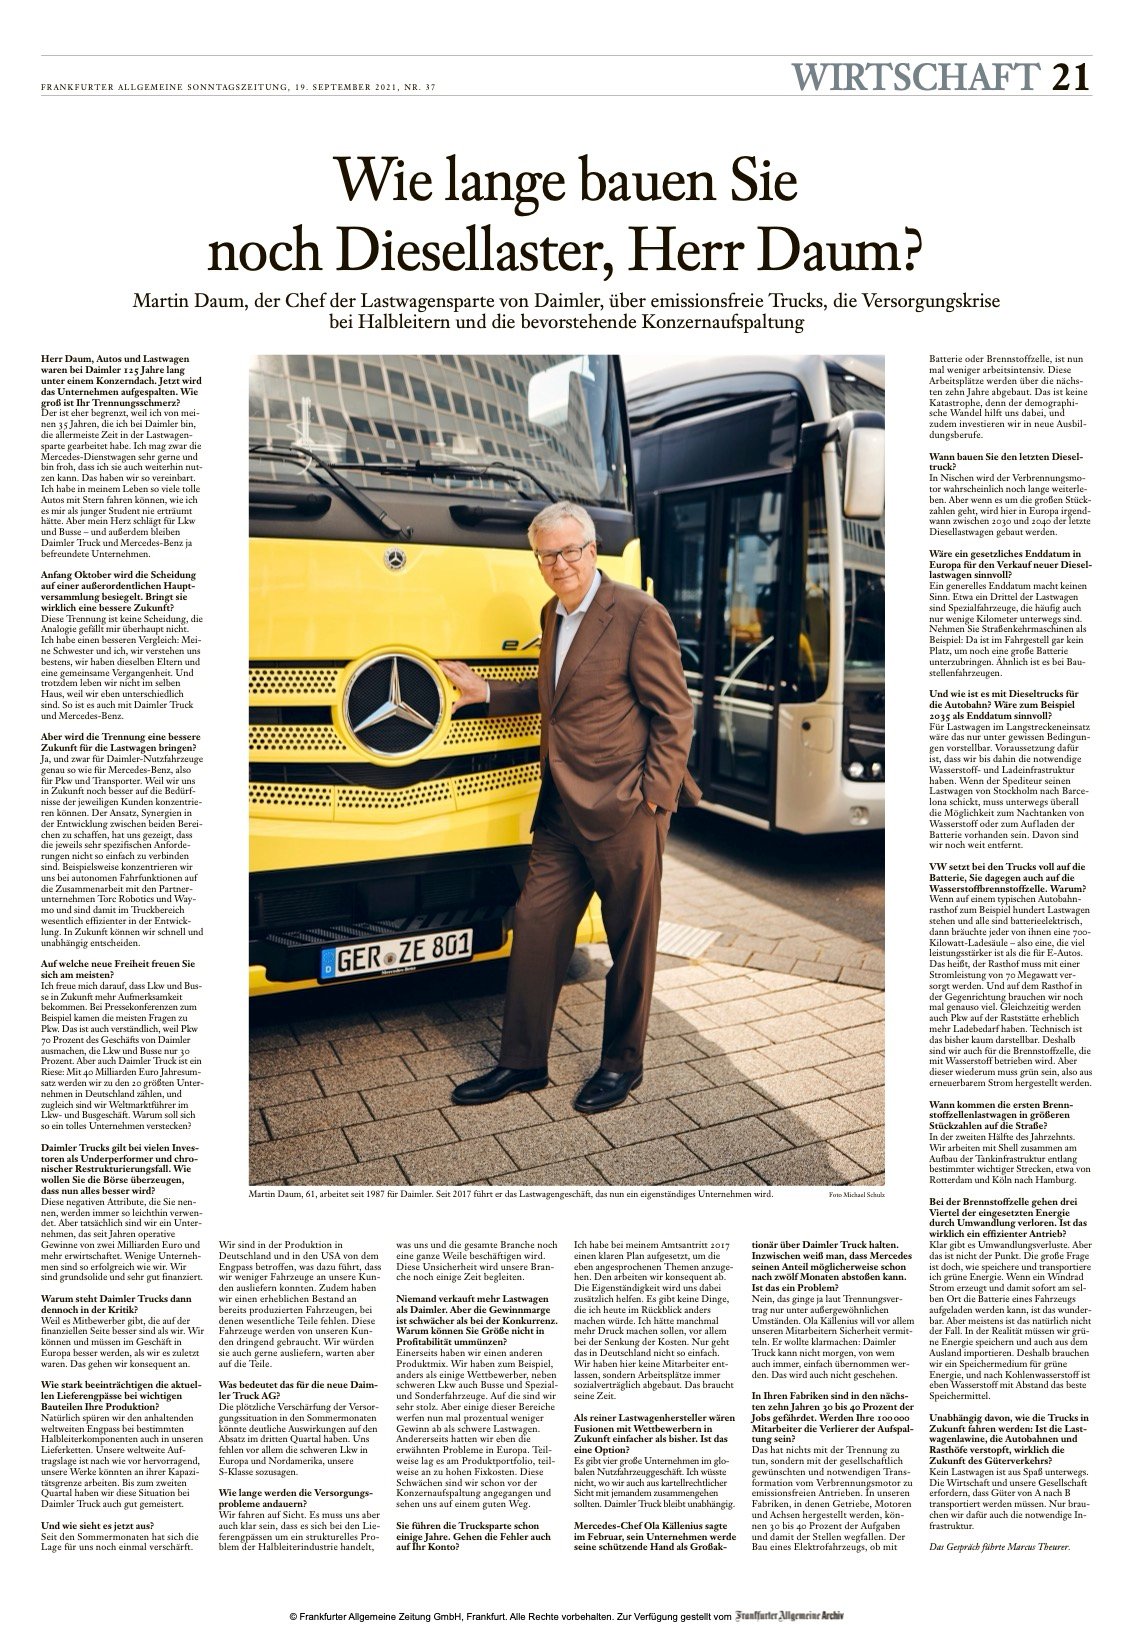 Tearsheet featuring a photo by Michael Schulz of Daimler Truck CEO Martin Daum.